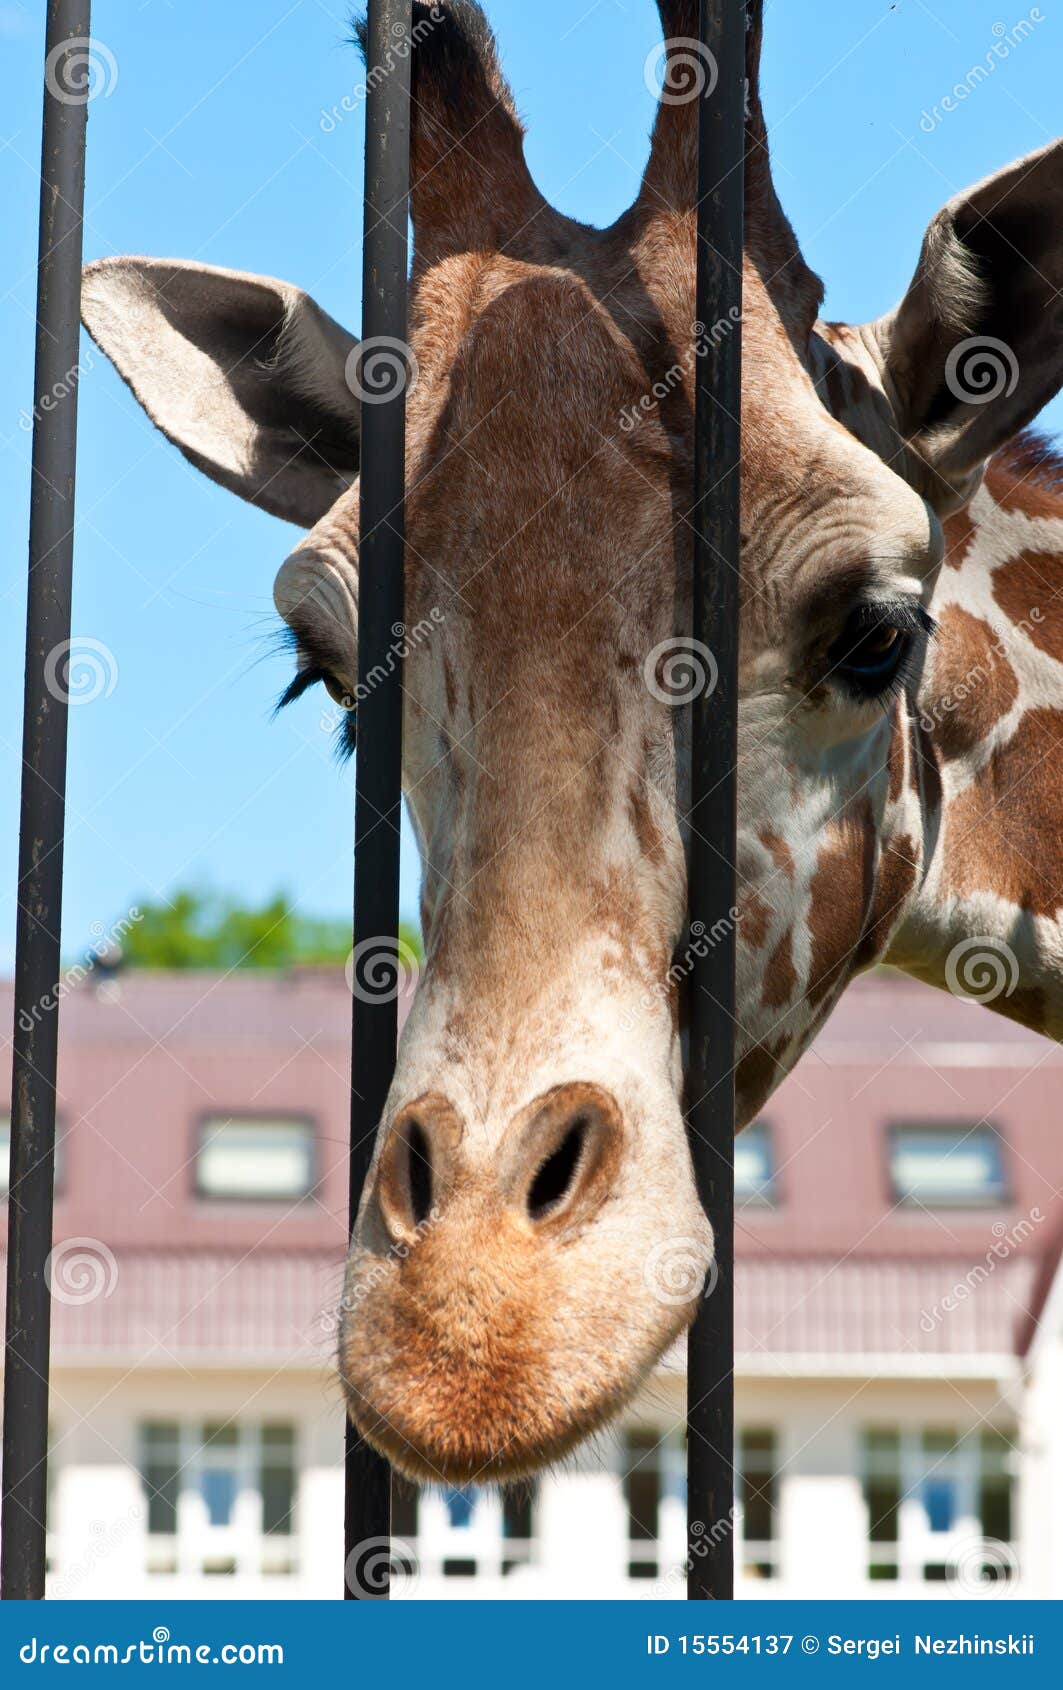 Portrait of a curious giraffe. Giraffe in a zoo.